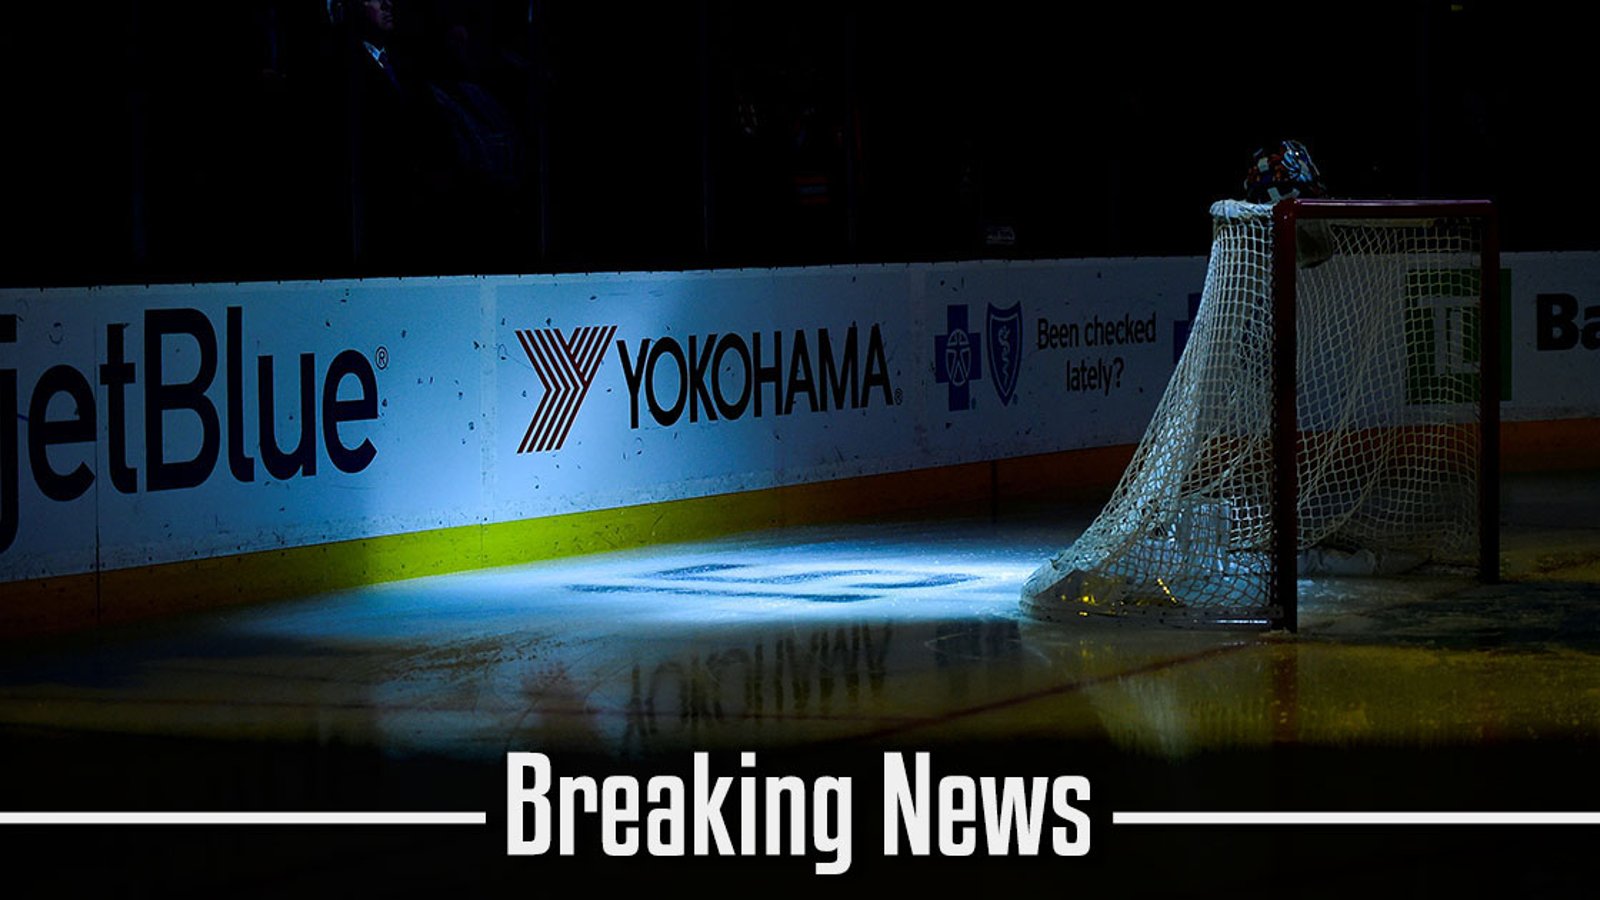 NHL goaltender destroys his former teammates in radio interview after trade. 